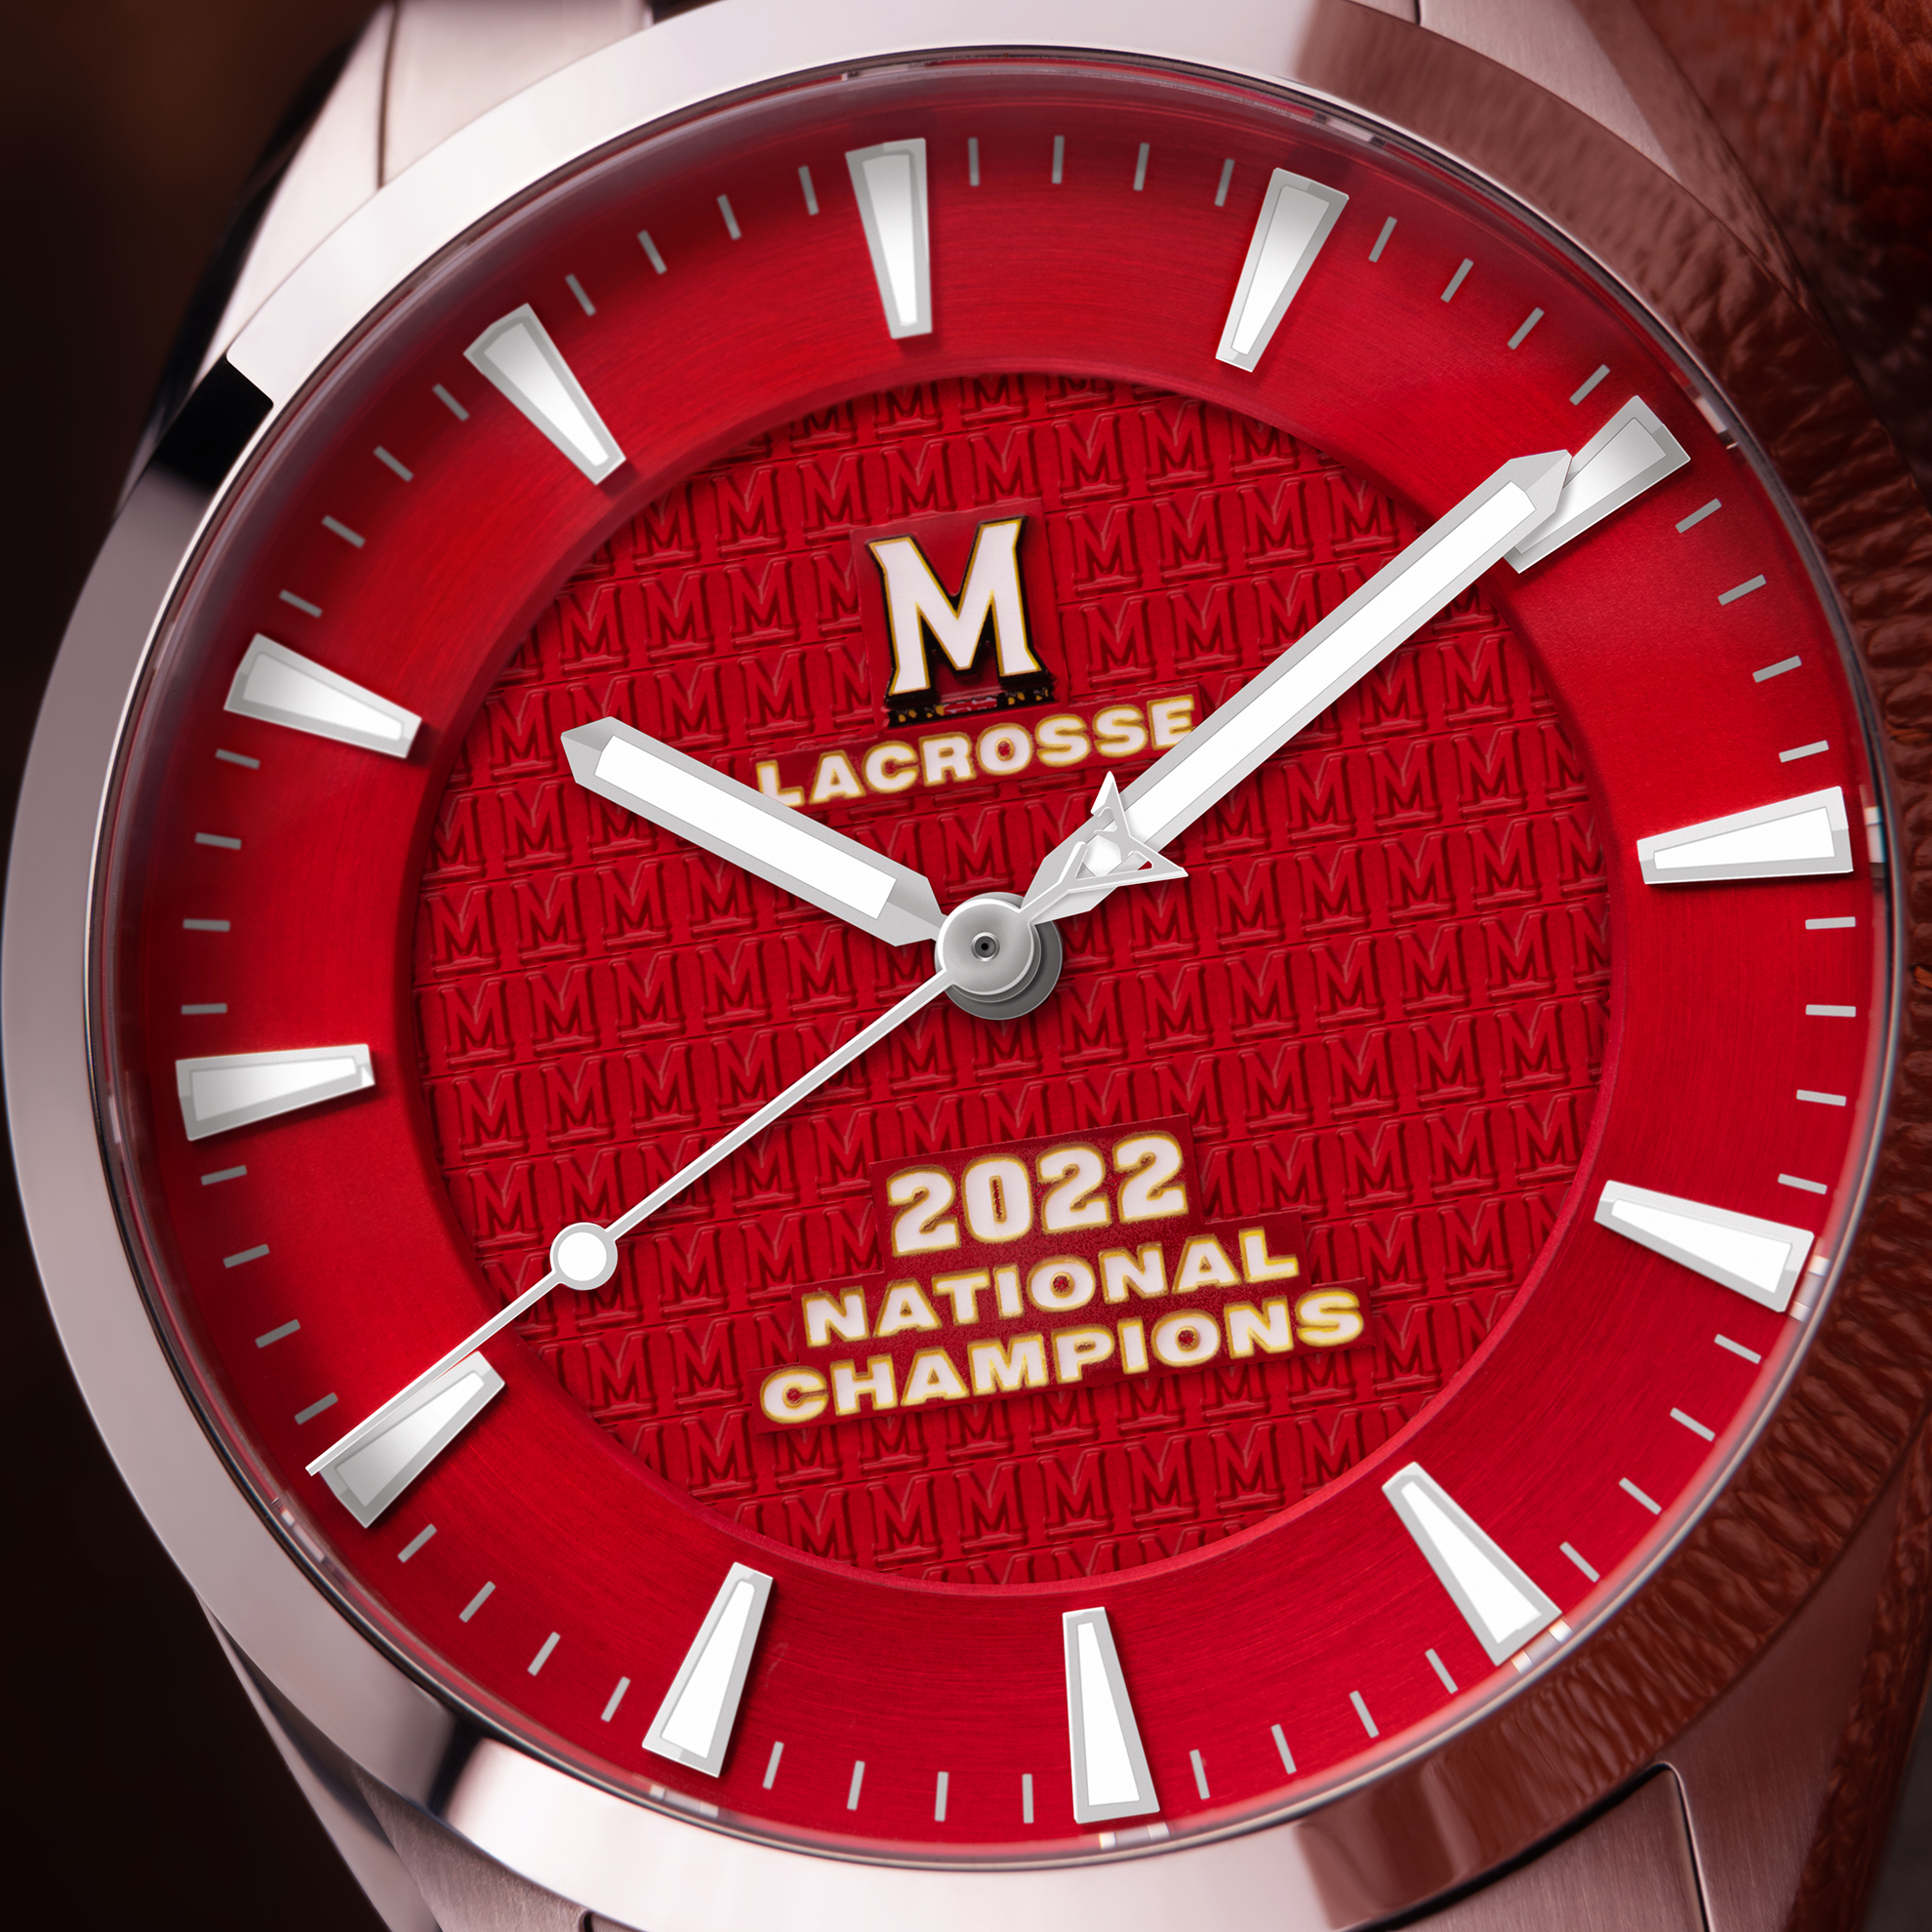 Maryland Lacrosse 2022 National Champions swiss made automatic watch